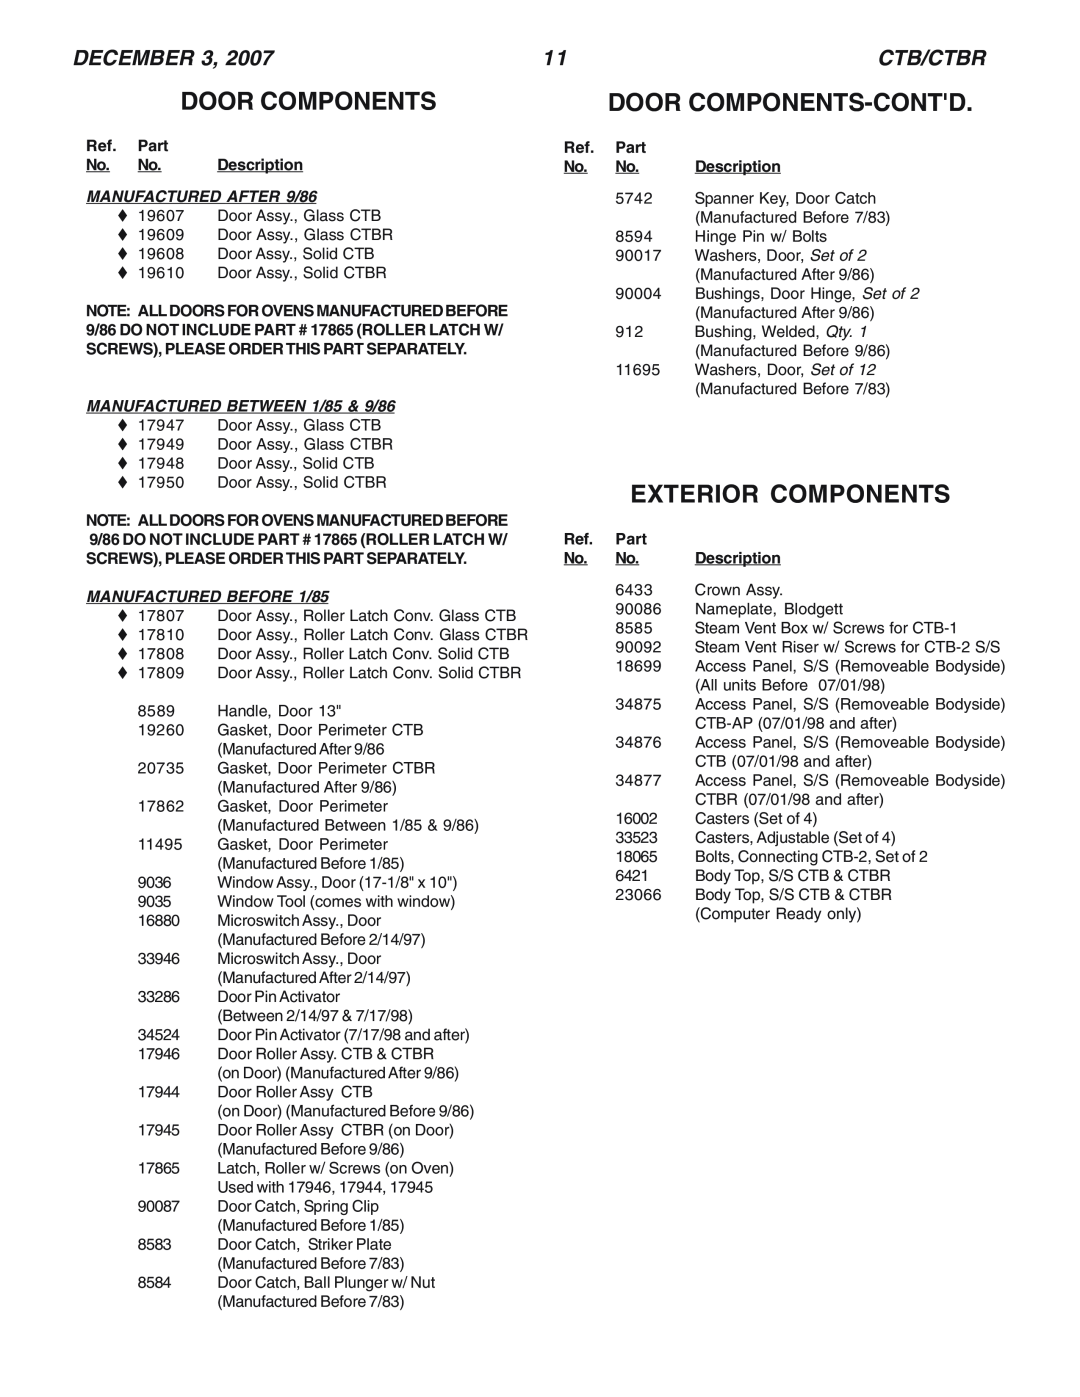 Blodgett CTBR manual Door Components-Contd, Exterior Components, December, Ctb/Ctbr, MANUFACTURED AFTER 9/86 